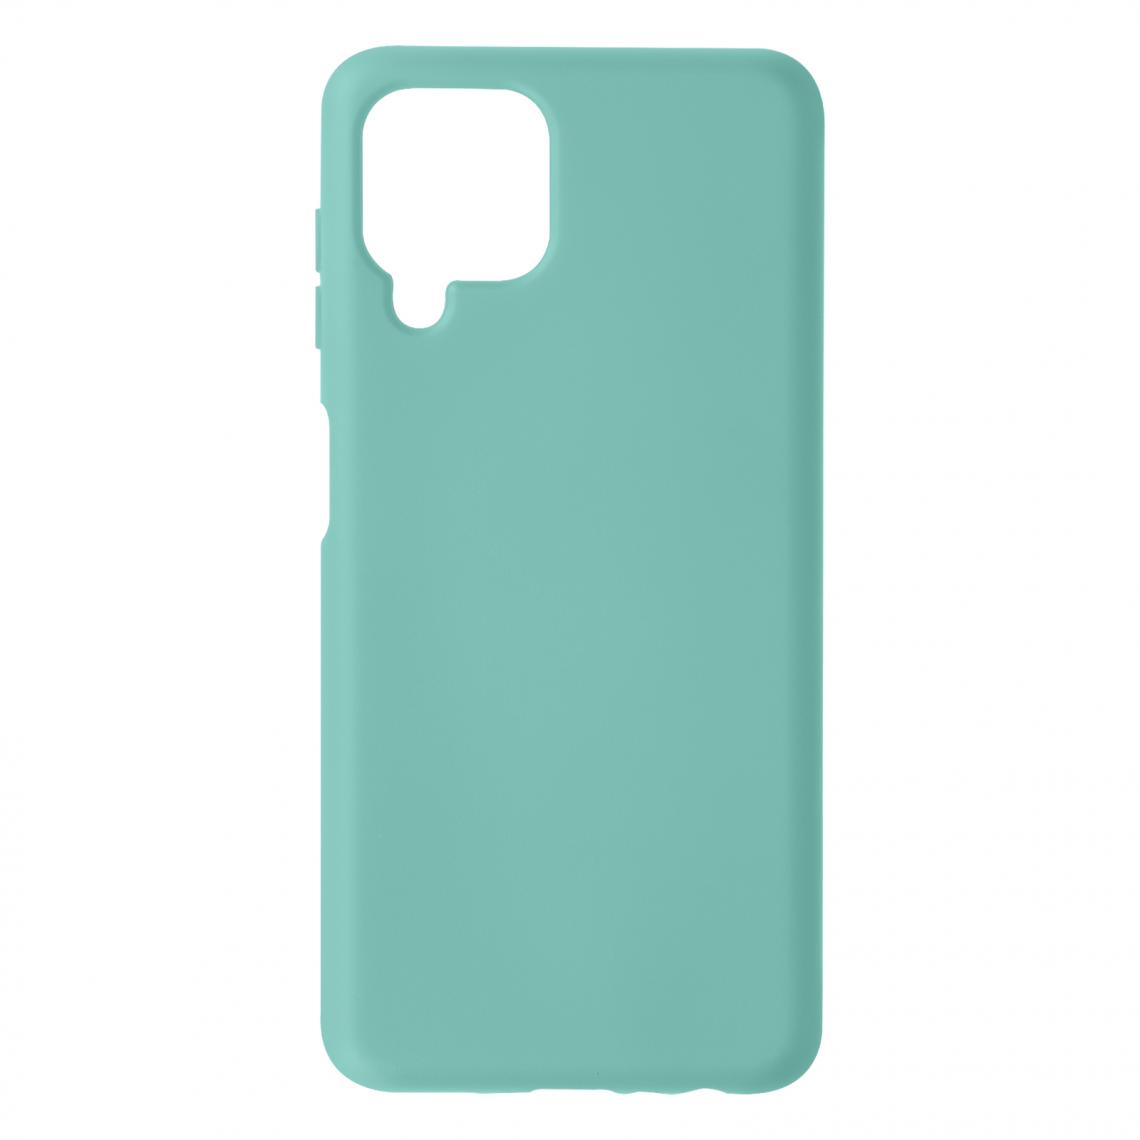 Avizar - Coque Samsung A22 Soft Touch Turquoise - Coque, étui smartphone